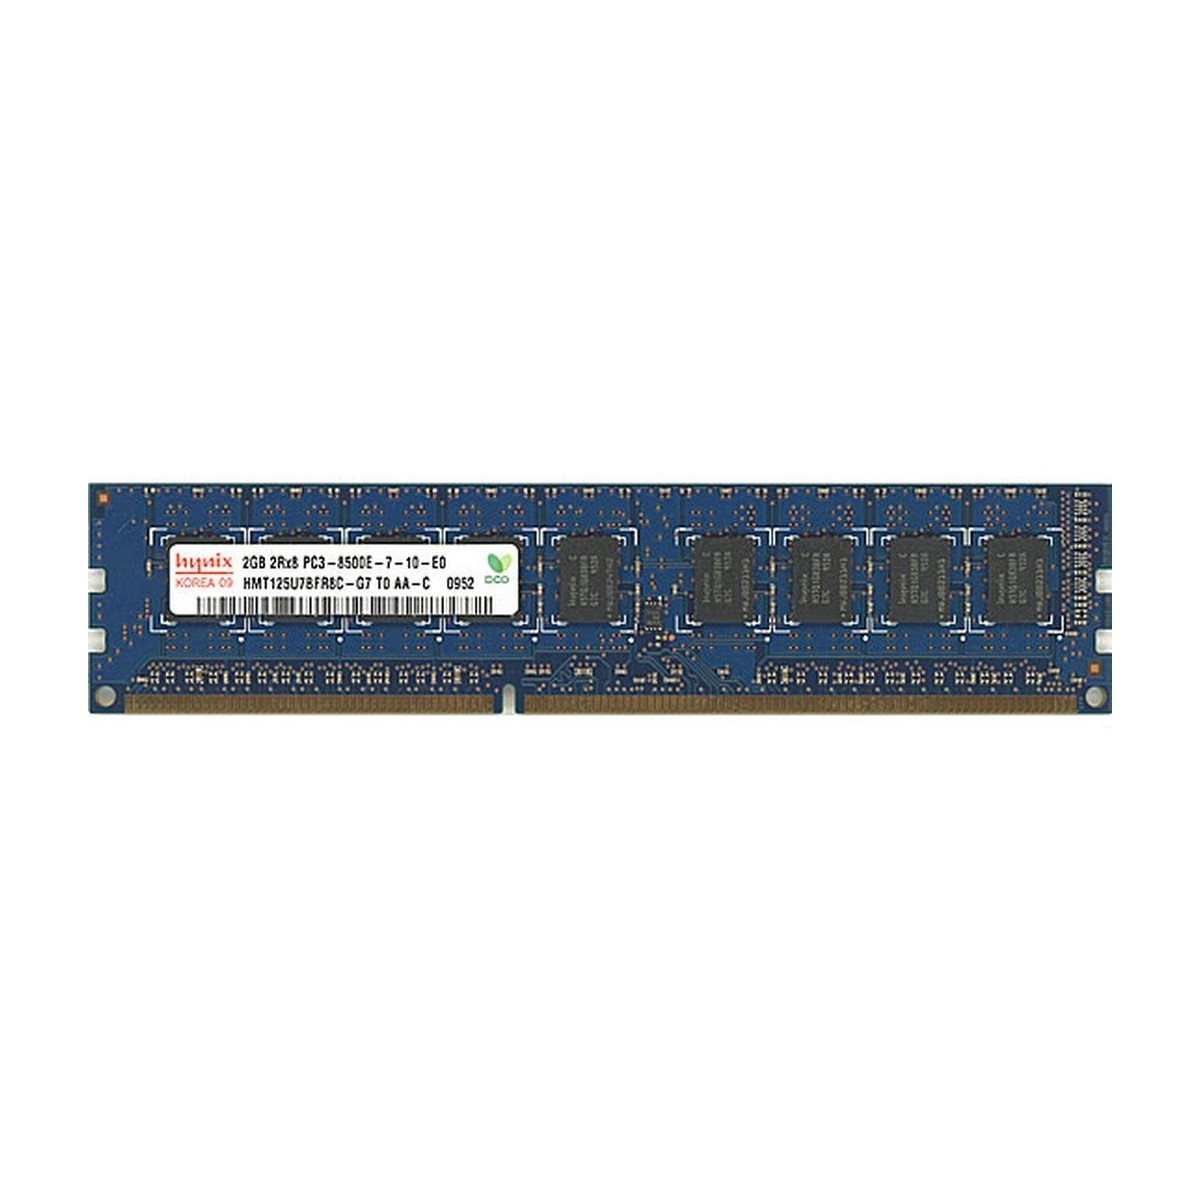 PAMIEC HYNIX 2GB 2Rx8 PC3-8500E HMT125U7BFRC-G7